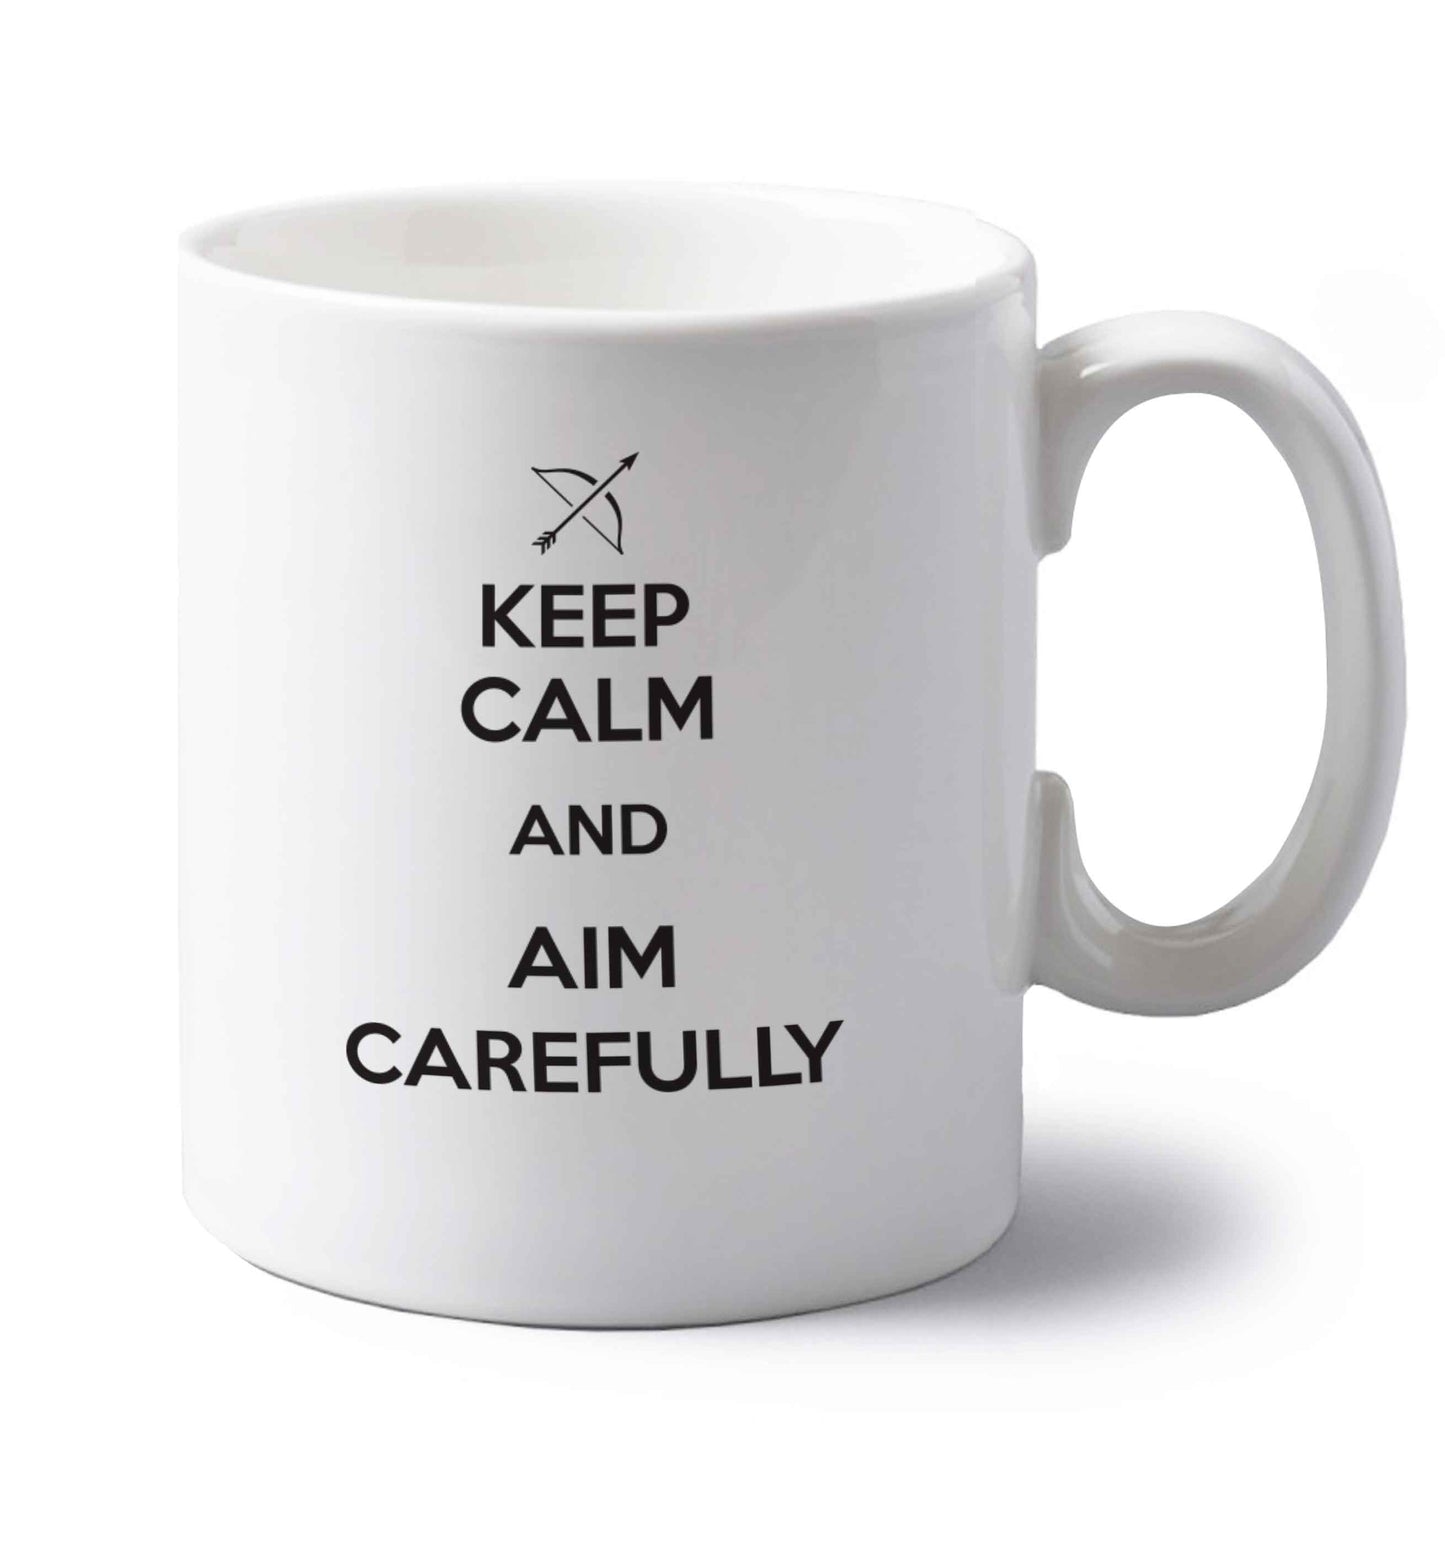 Keep calm and aim carefully left handed white ceramic mug 